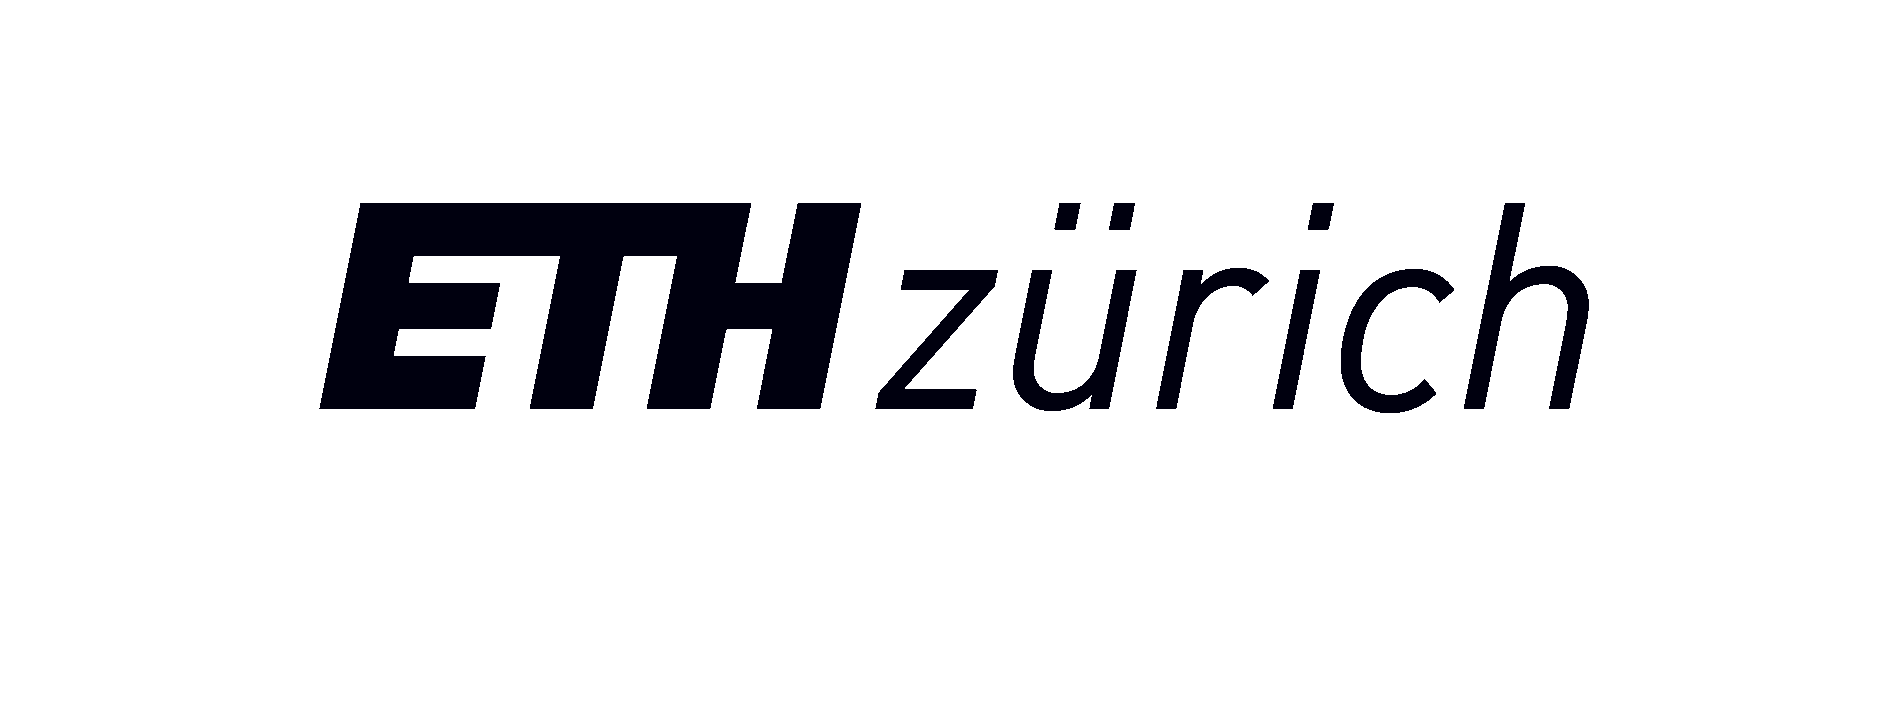 Eth Zurich And The Paul Scherrer Institute (Psi) Establish A Joint Quantum Hub